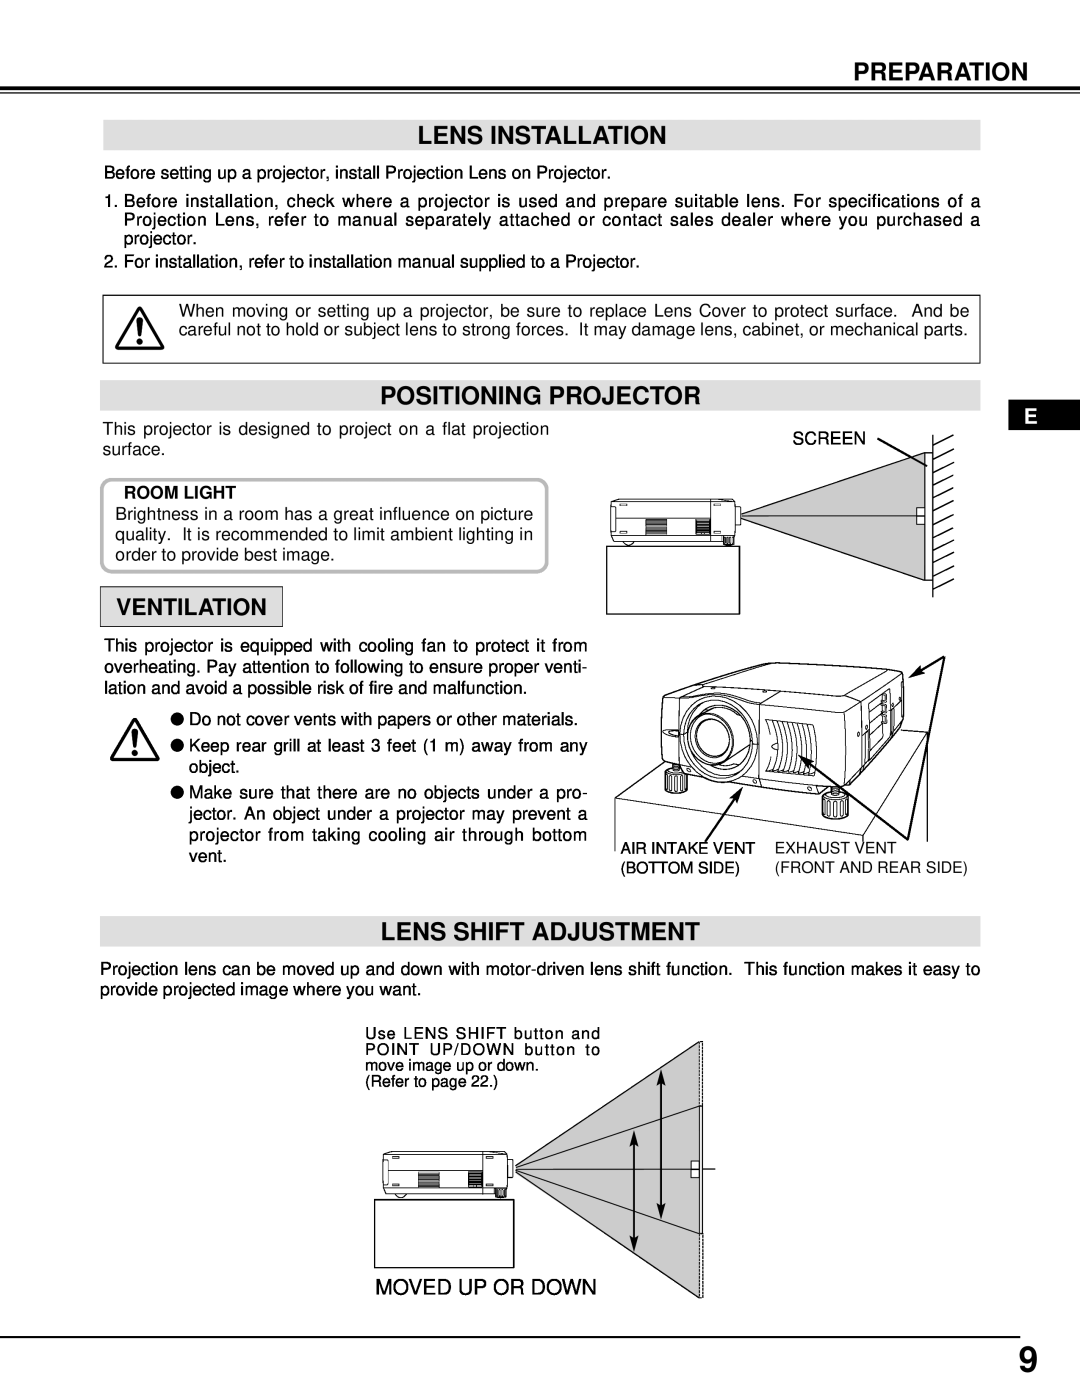 Dukane 28A8945, 28A9058 manual Preparation Lens Installation, Positioning Projector, Lens Shift Adjustment, Ventilation 